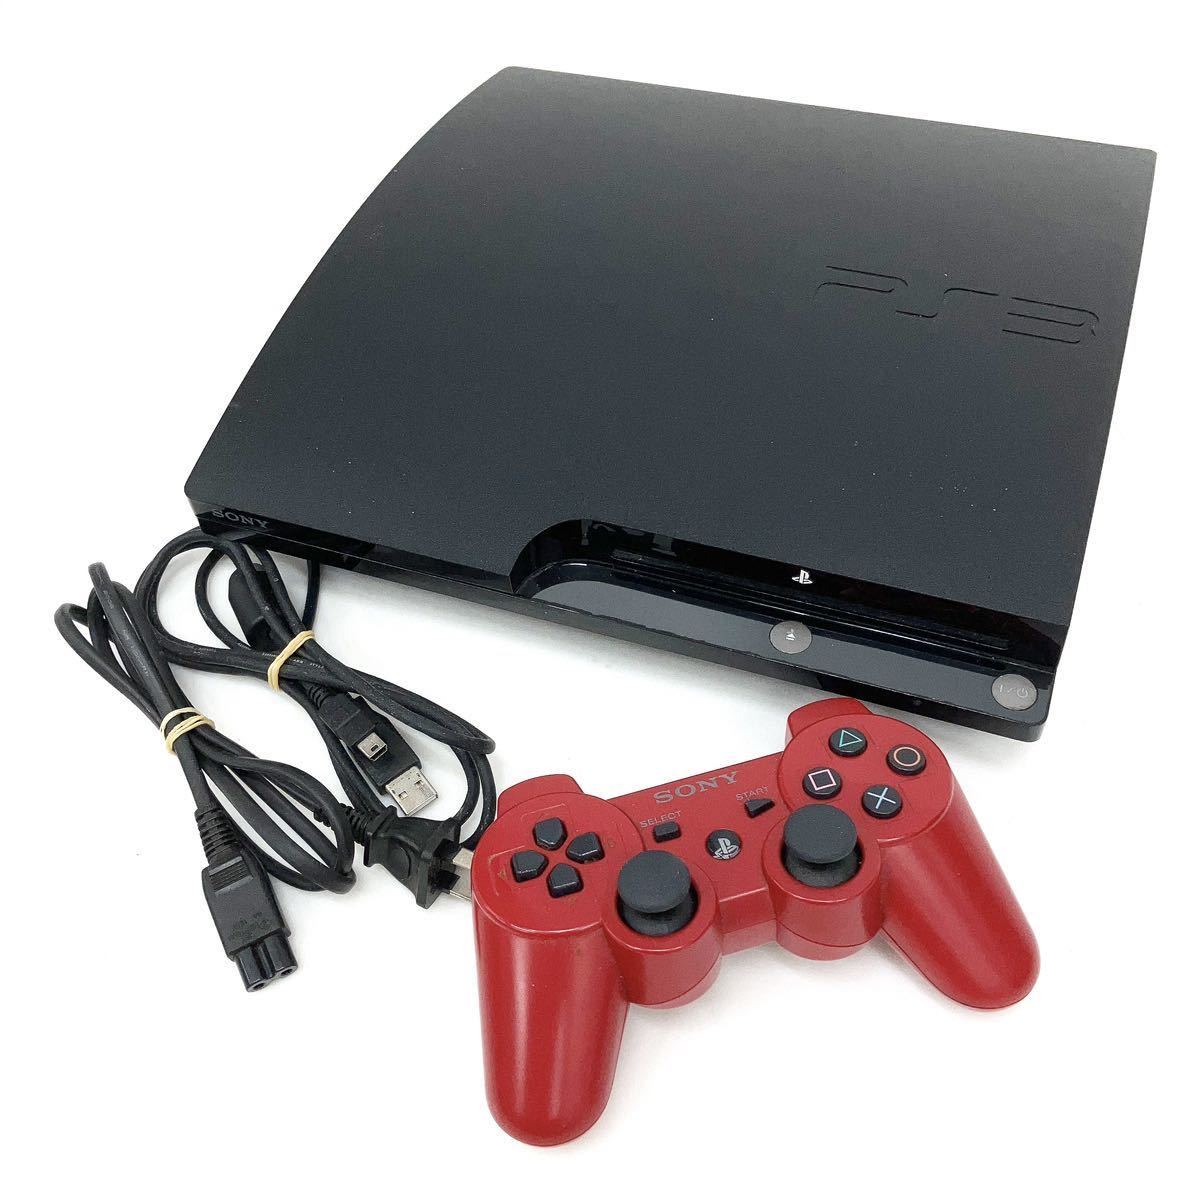 SONY CECH-2000A PS3 PlayStation 3 body 120GB charcoal black Sony